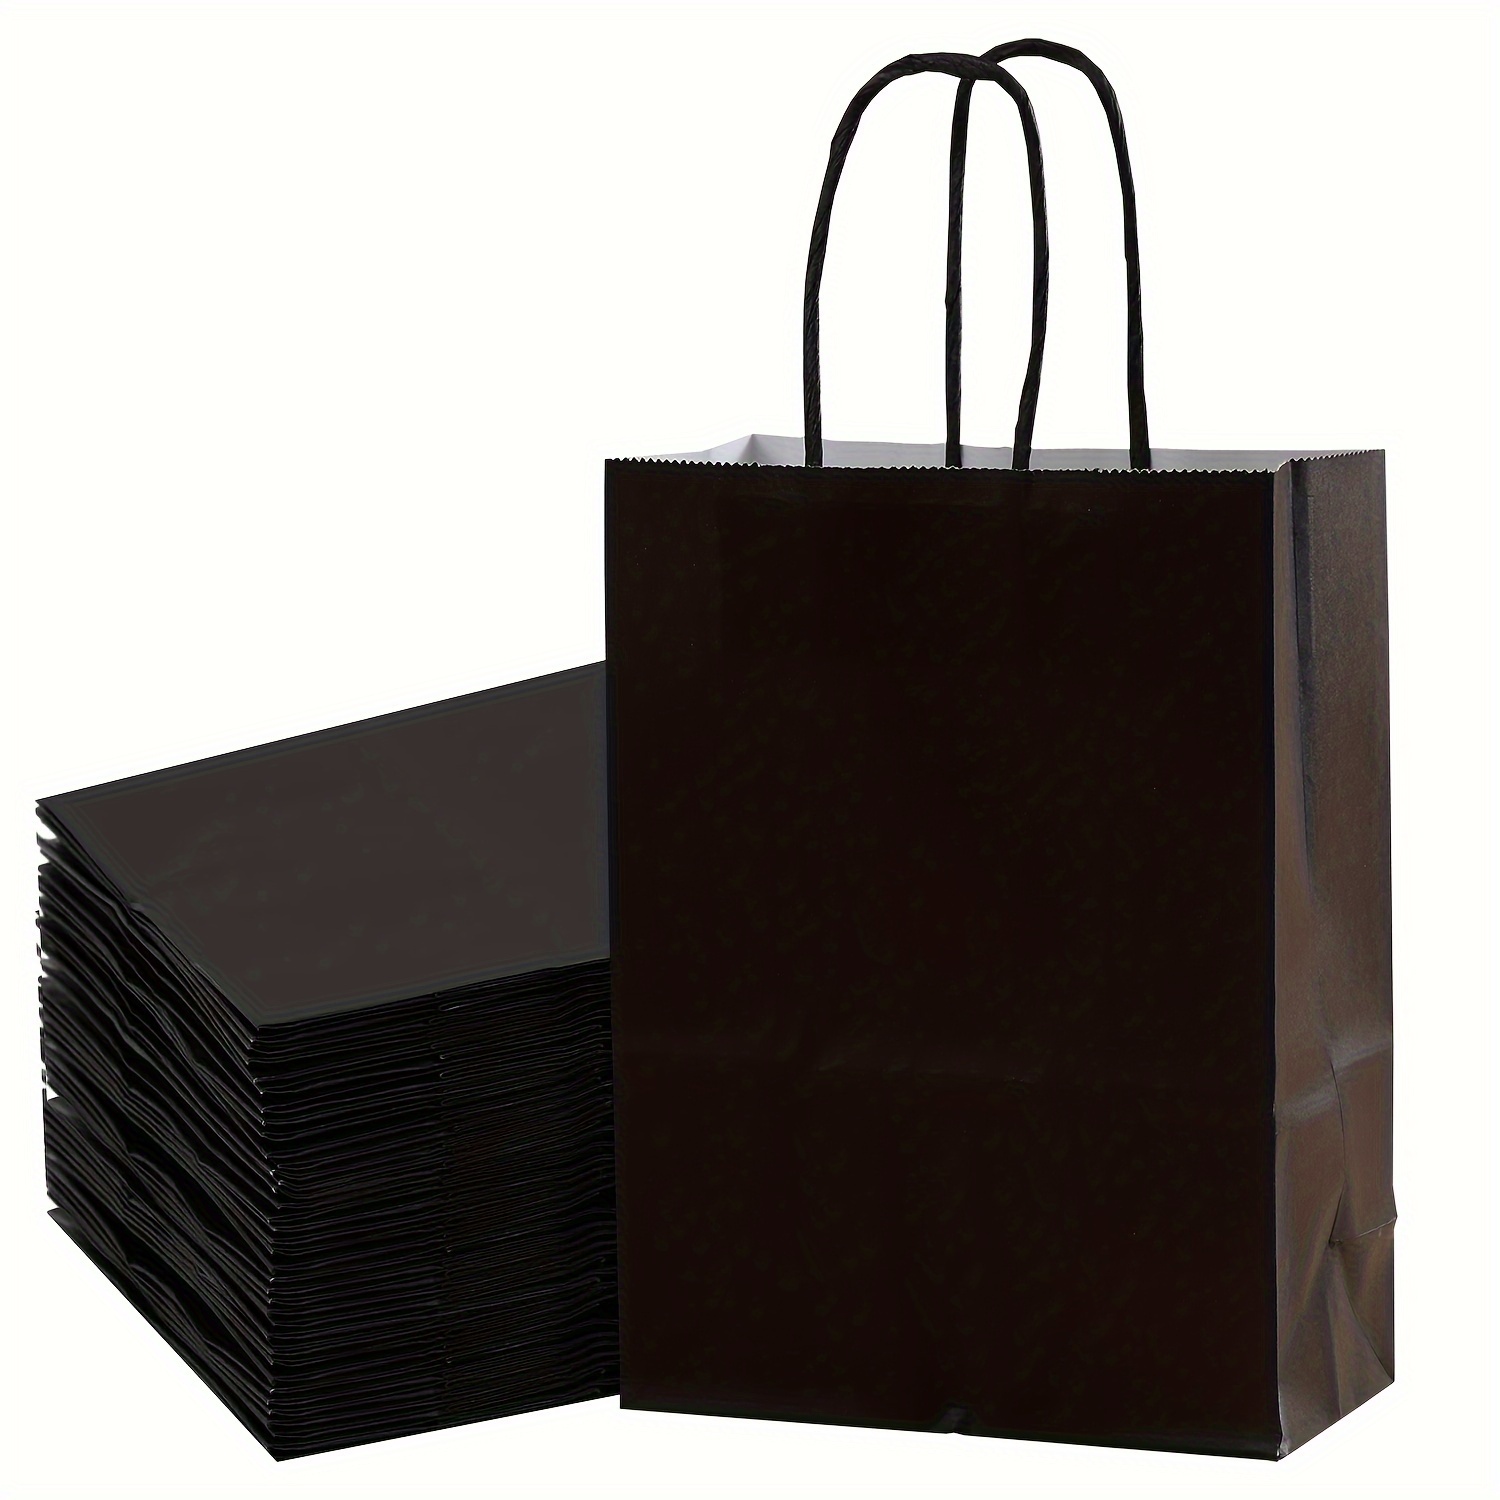 

24-piece Black Gift Bags 6.3x8.7x3.1" - Versatile For Birthdays, Weddings & More | Reusable Shopping & Takeout Bags With Superhero Theme